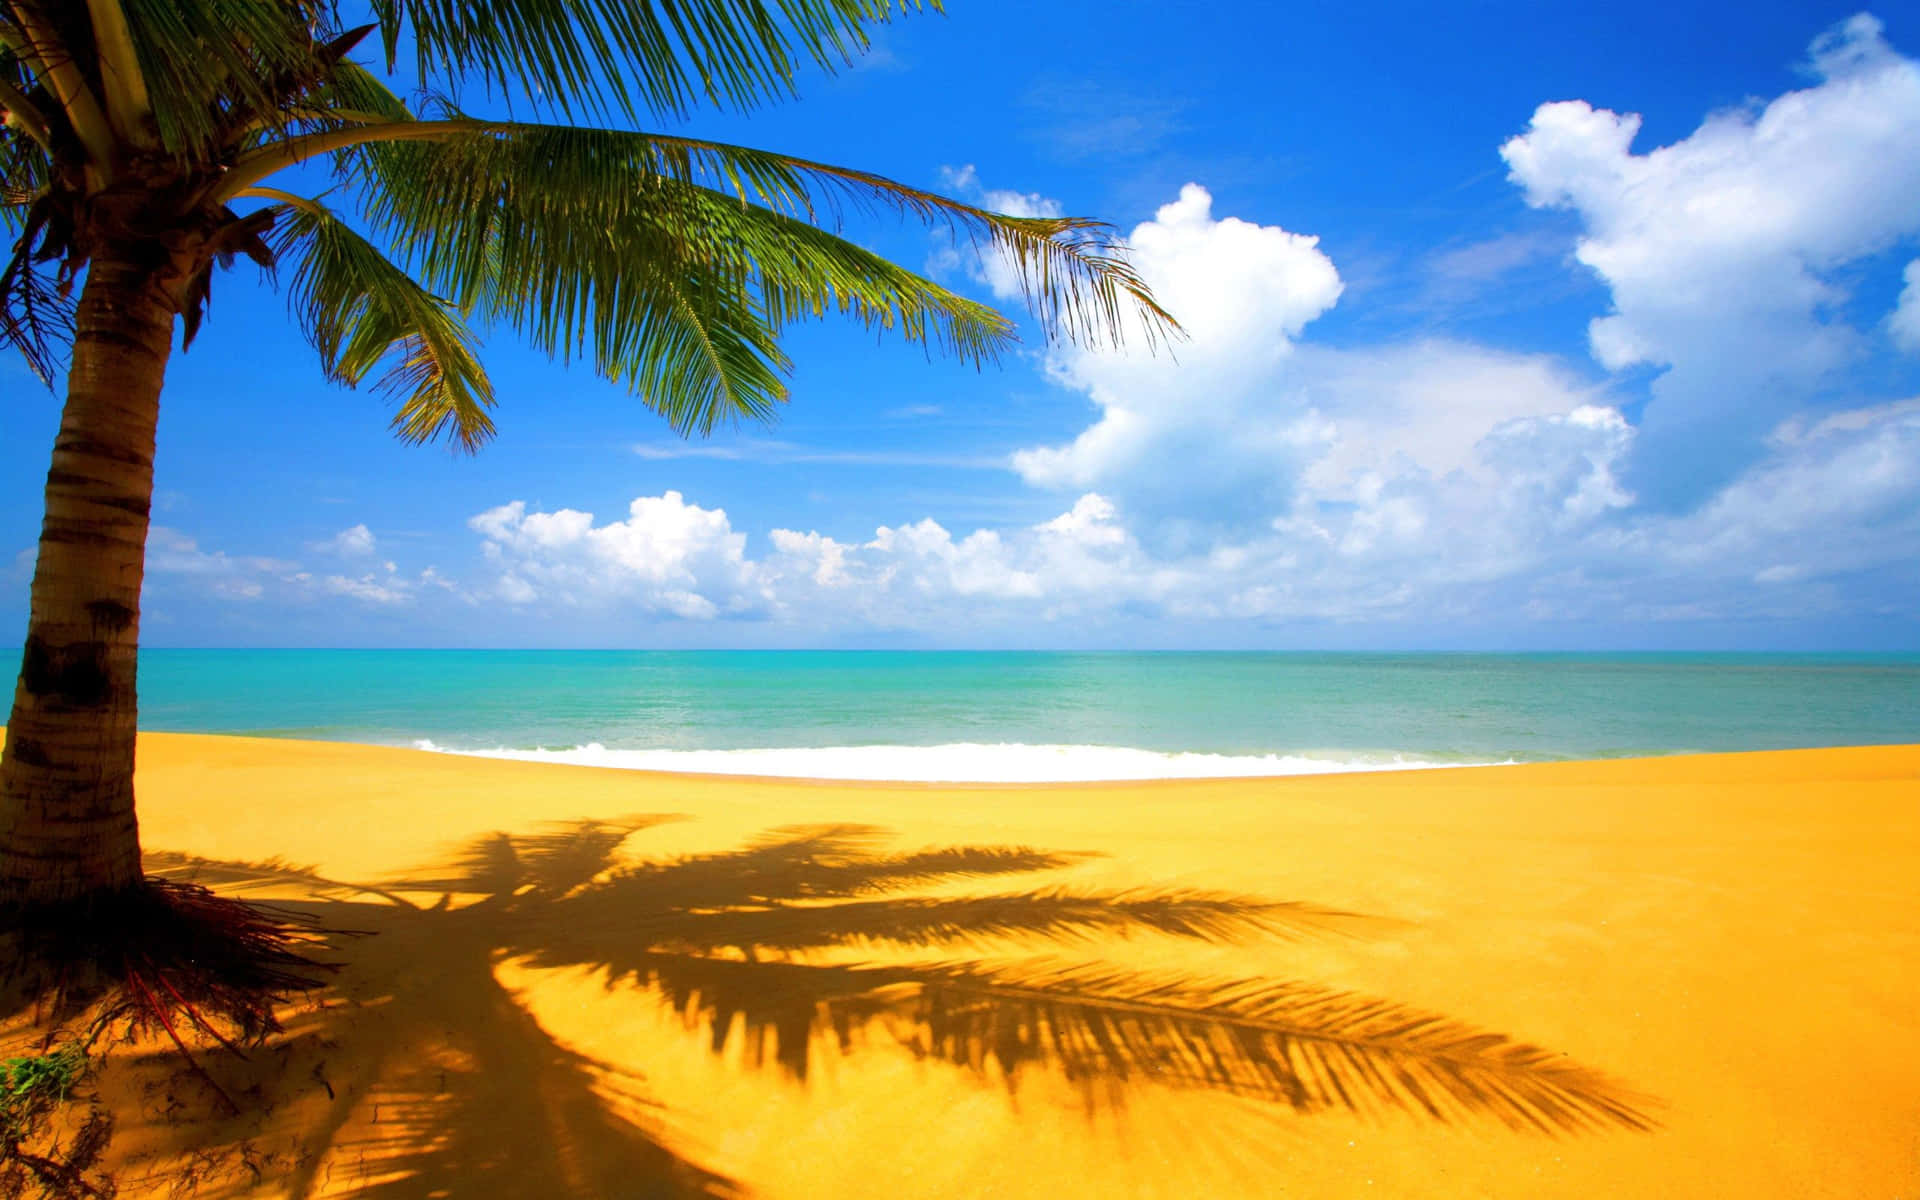 A Palm Tree On A Sandy Beach